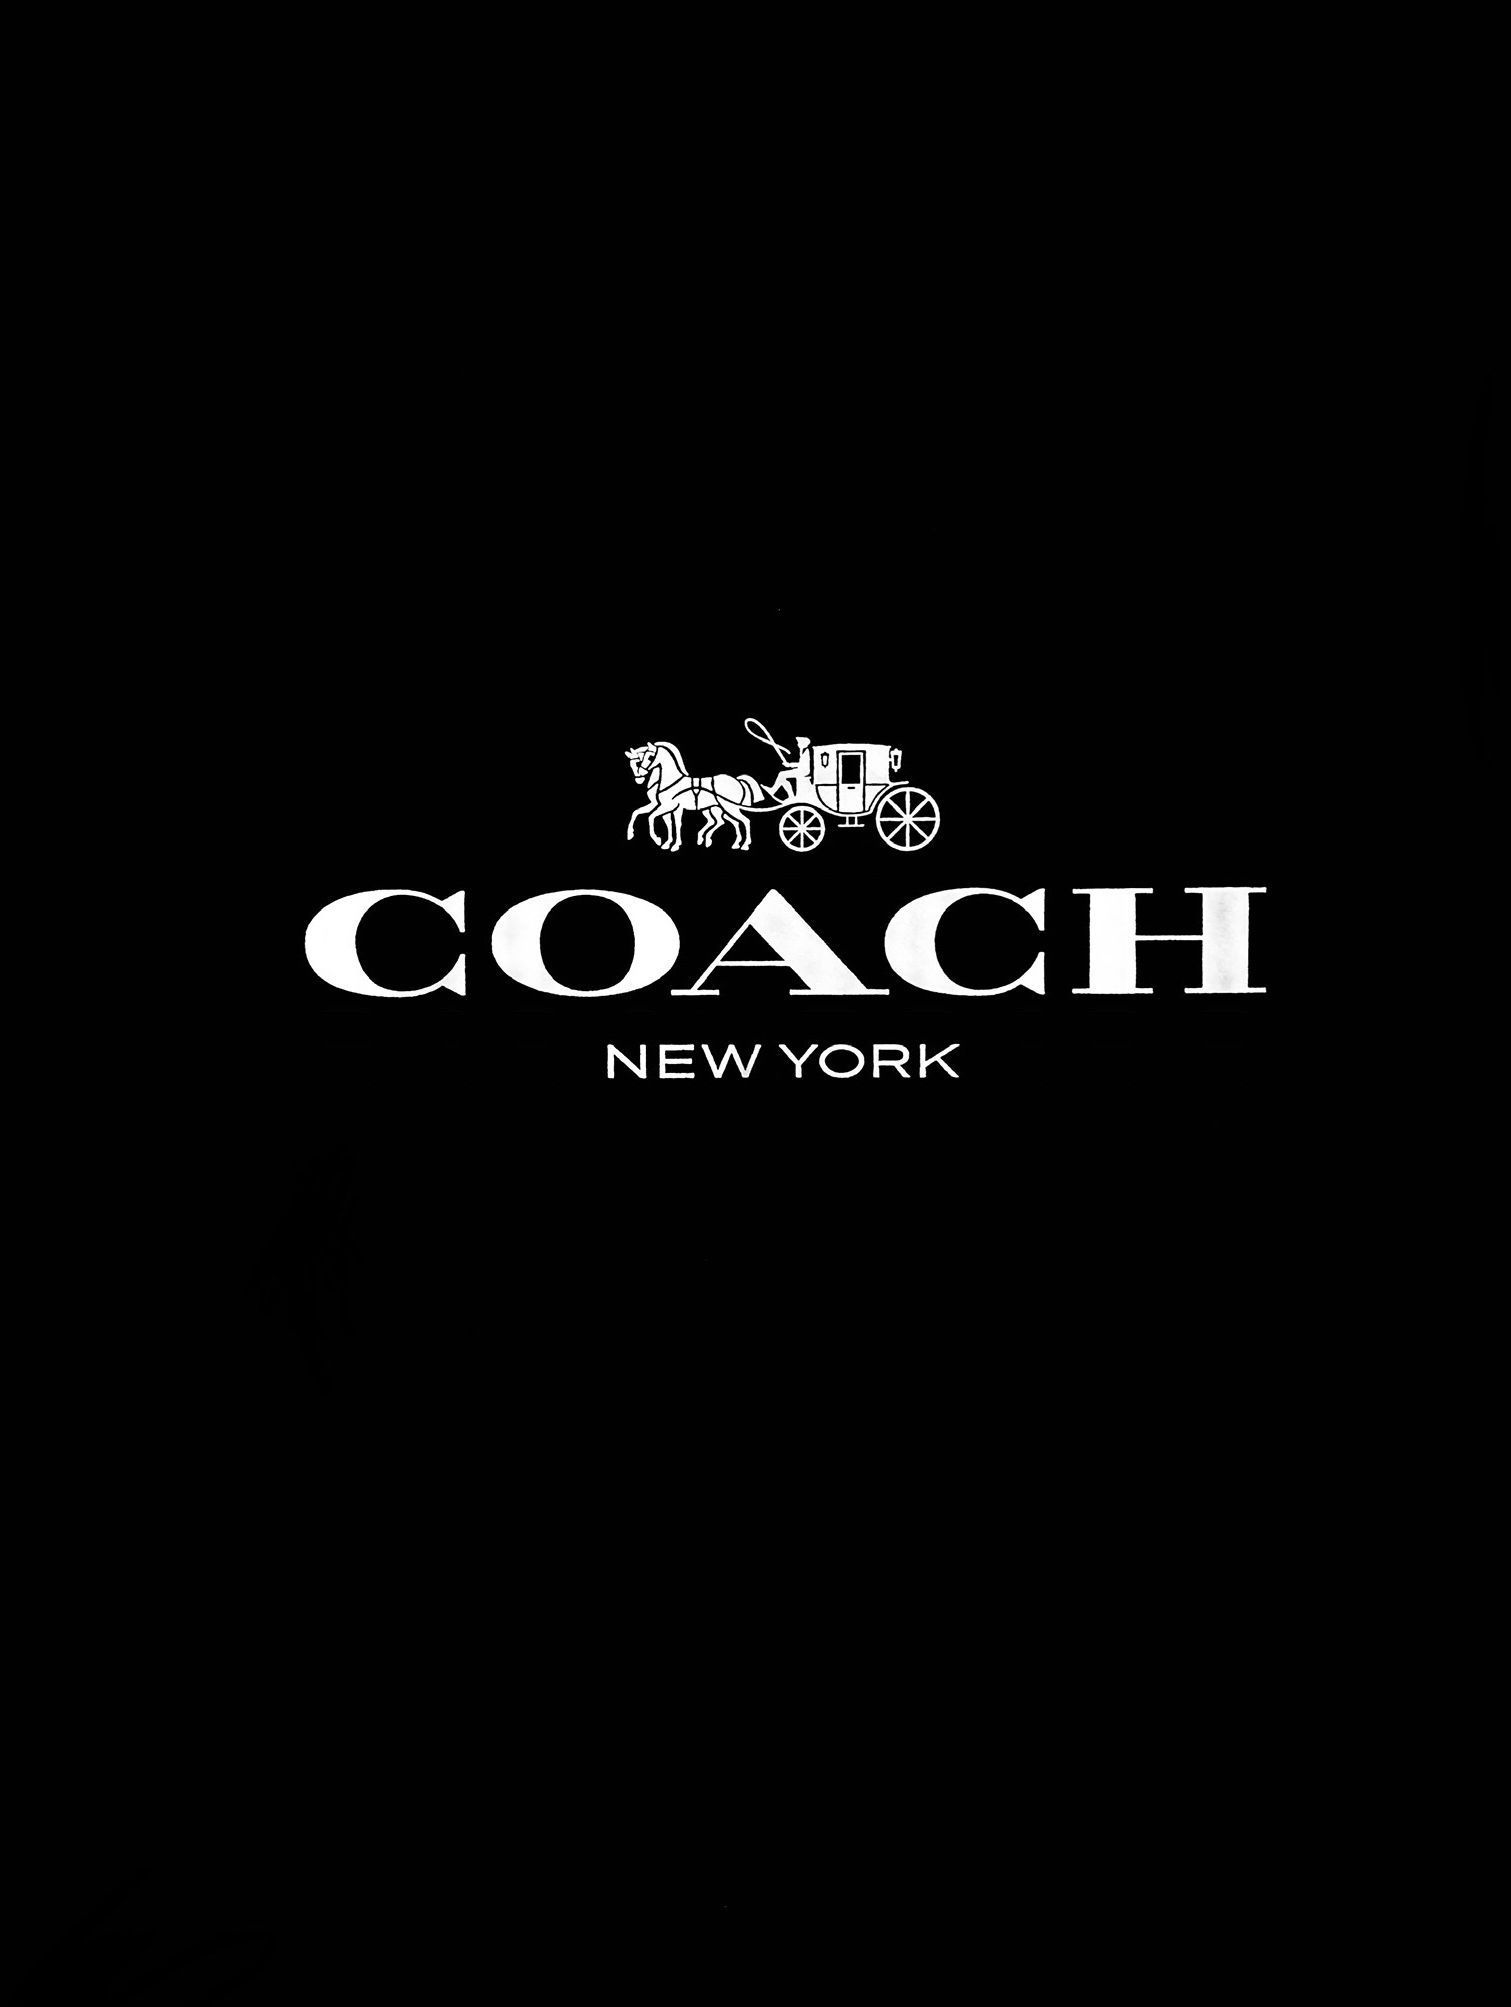 Coach iPhone Wallpaper Free .wallpaperaccess.com